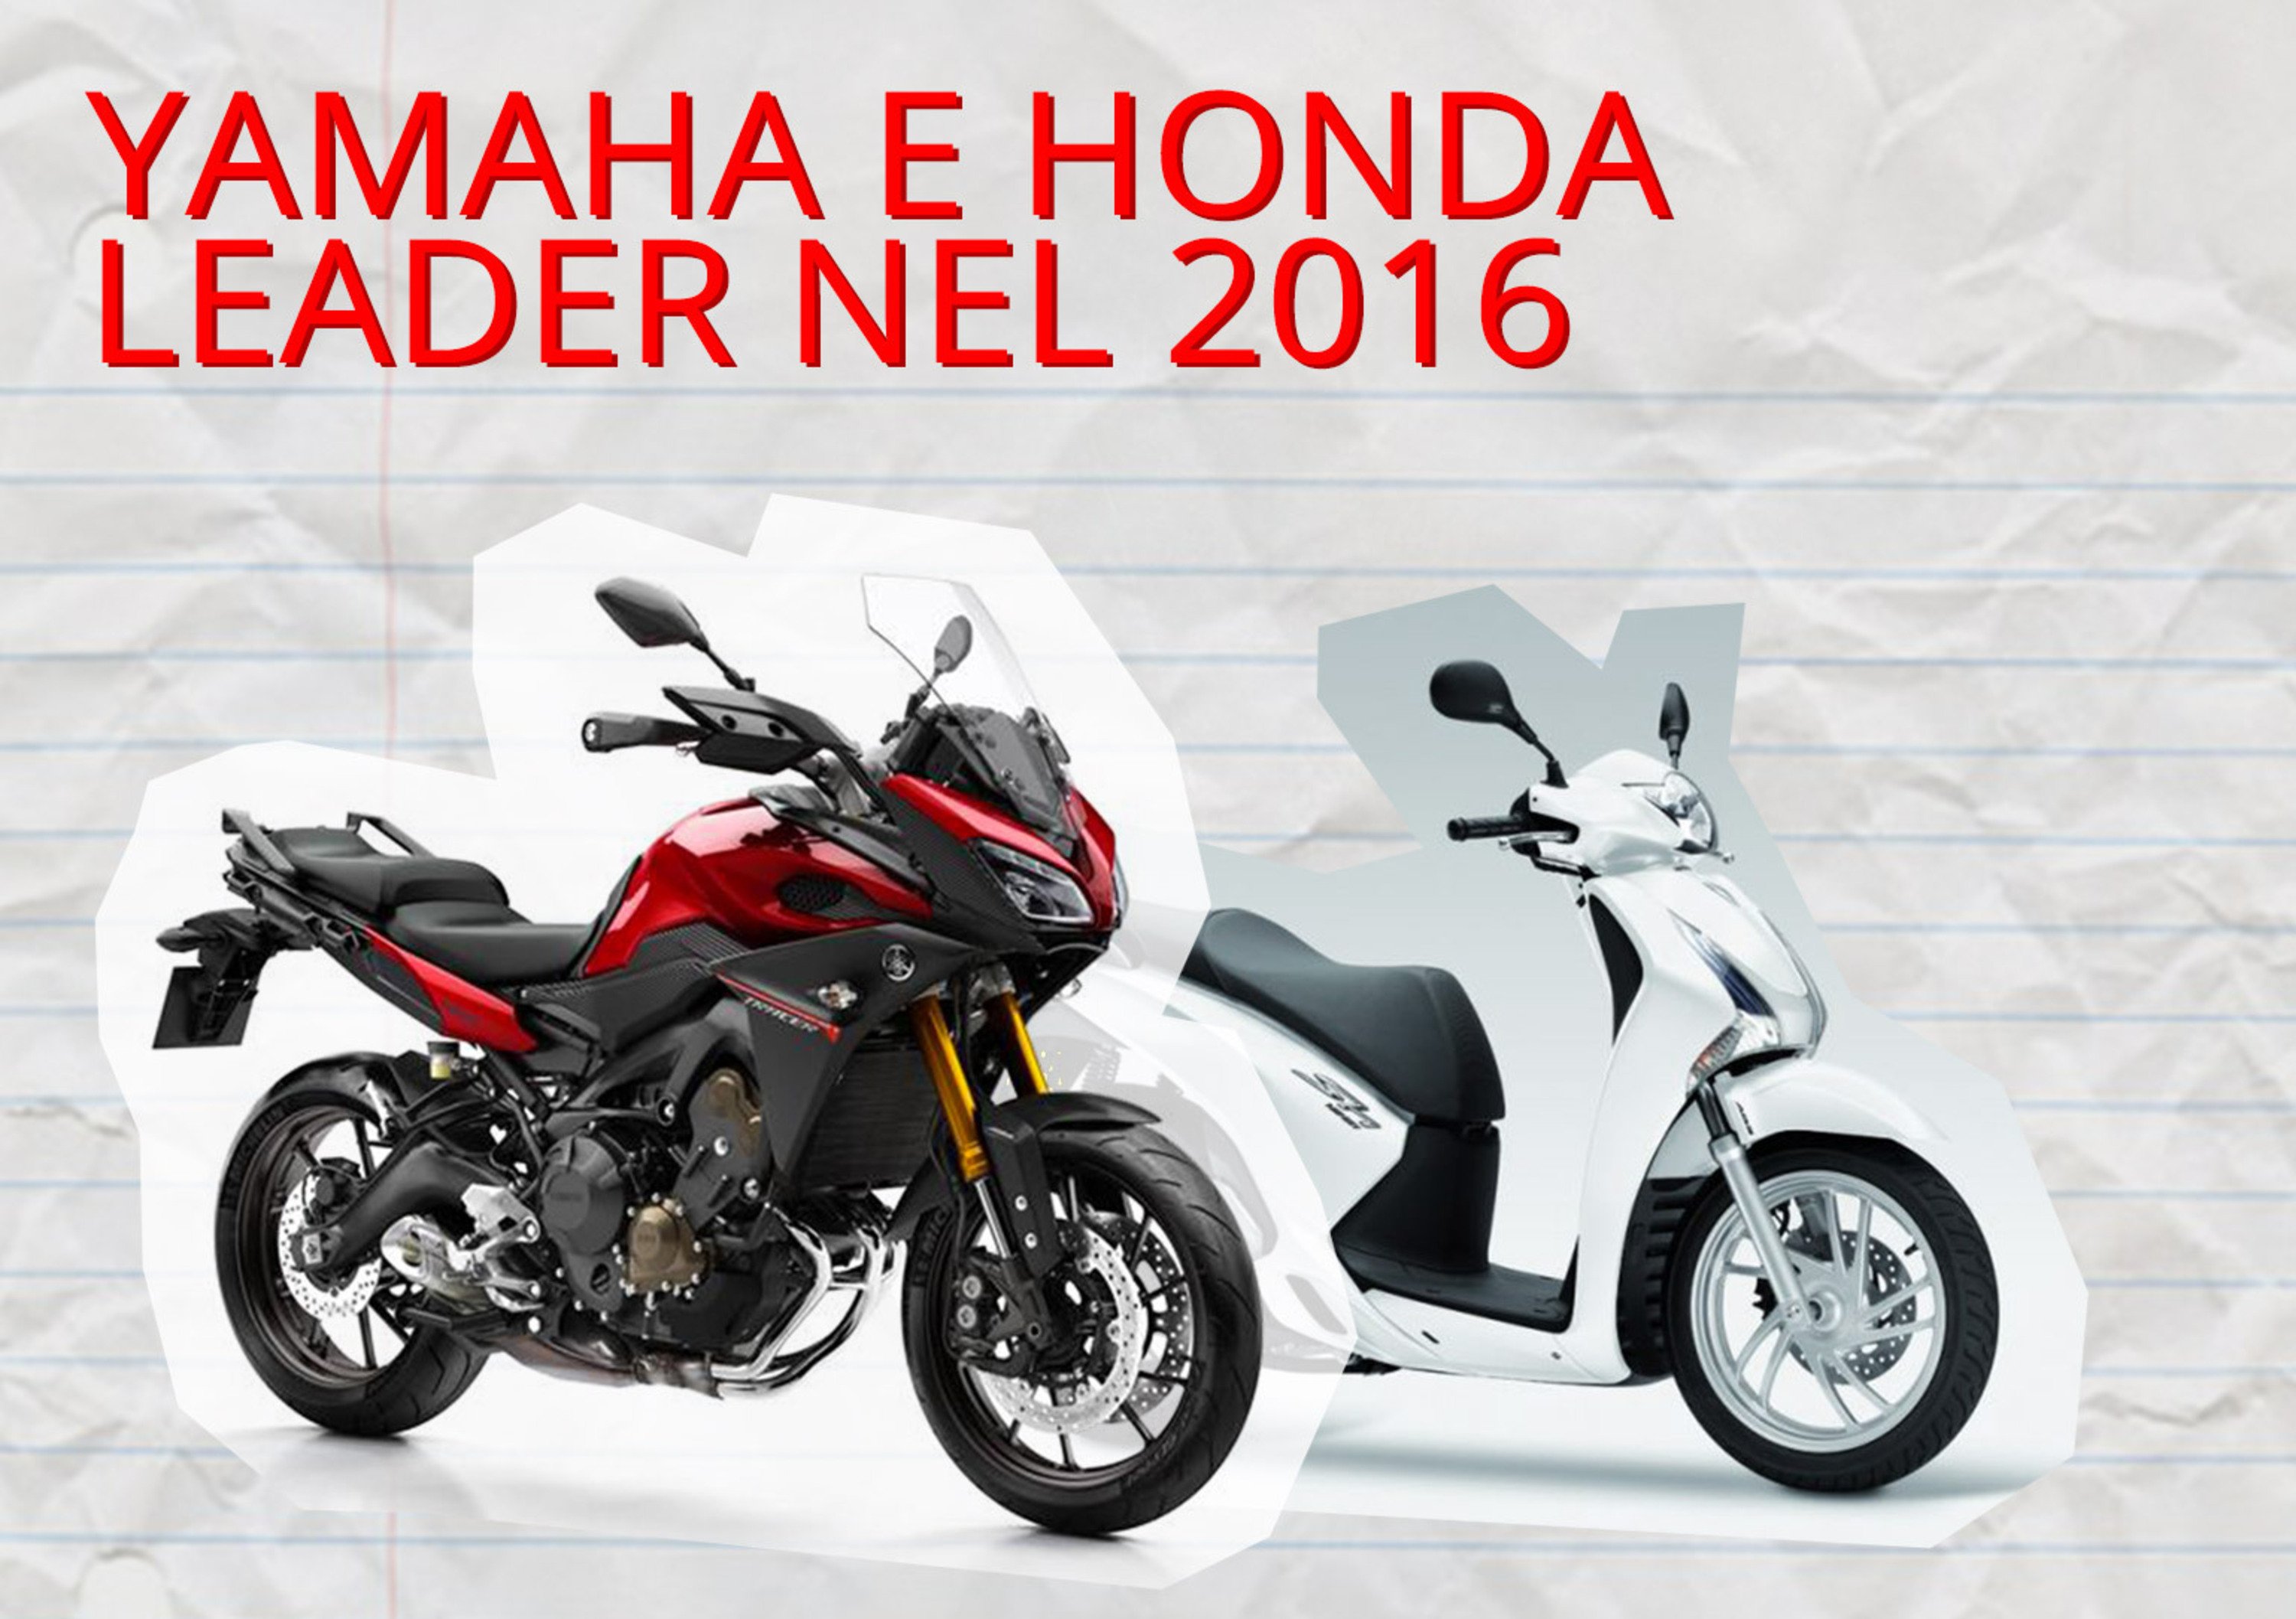 Yamaha vende pi&ugrave; moto. Honda pi&ugrave; scooter